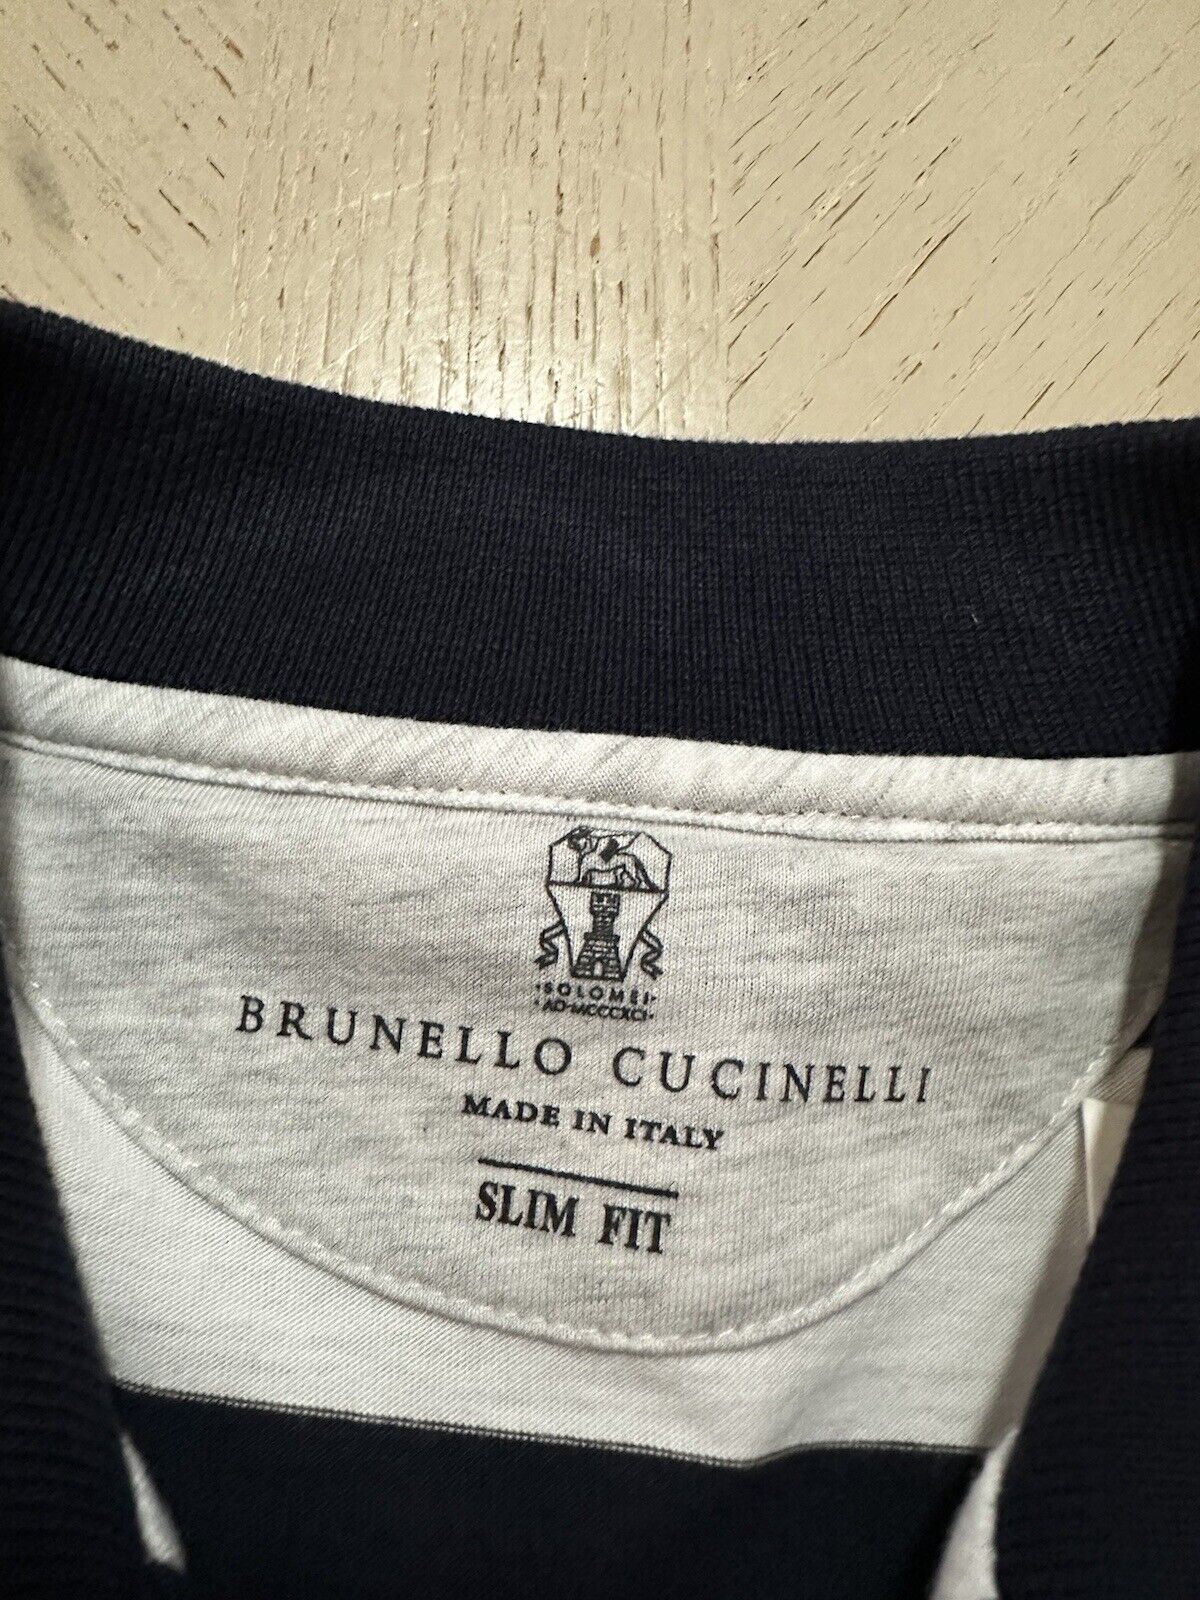 New $730 Brunello Cucinelli Men Striped Slim Fit Polo Shirt Navy/White Size S